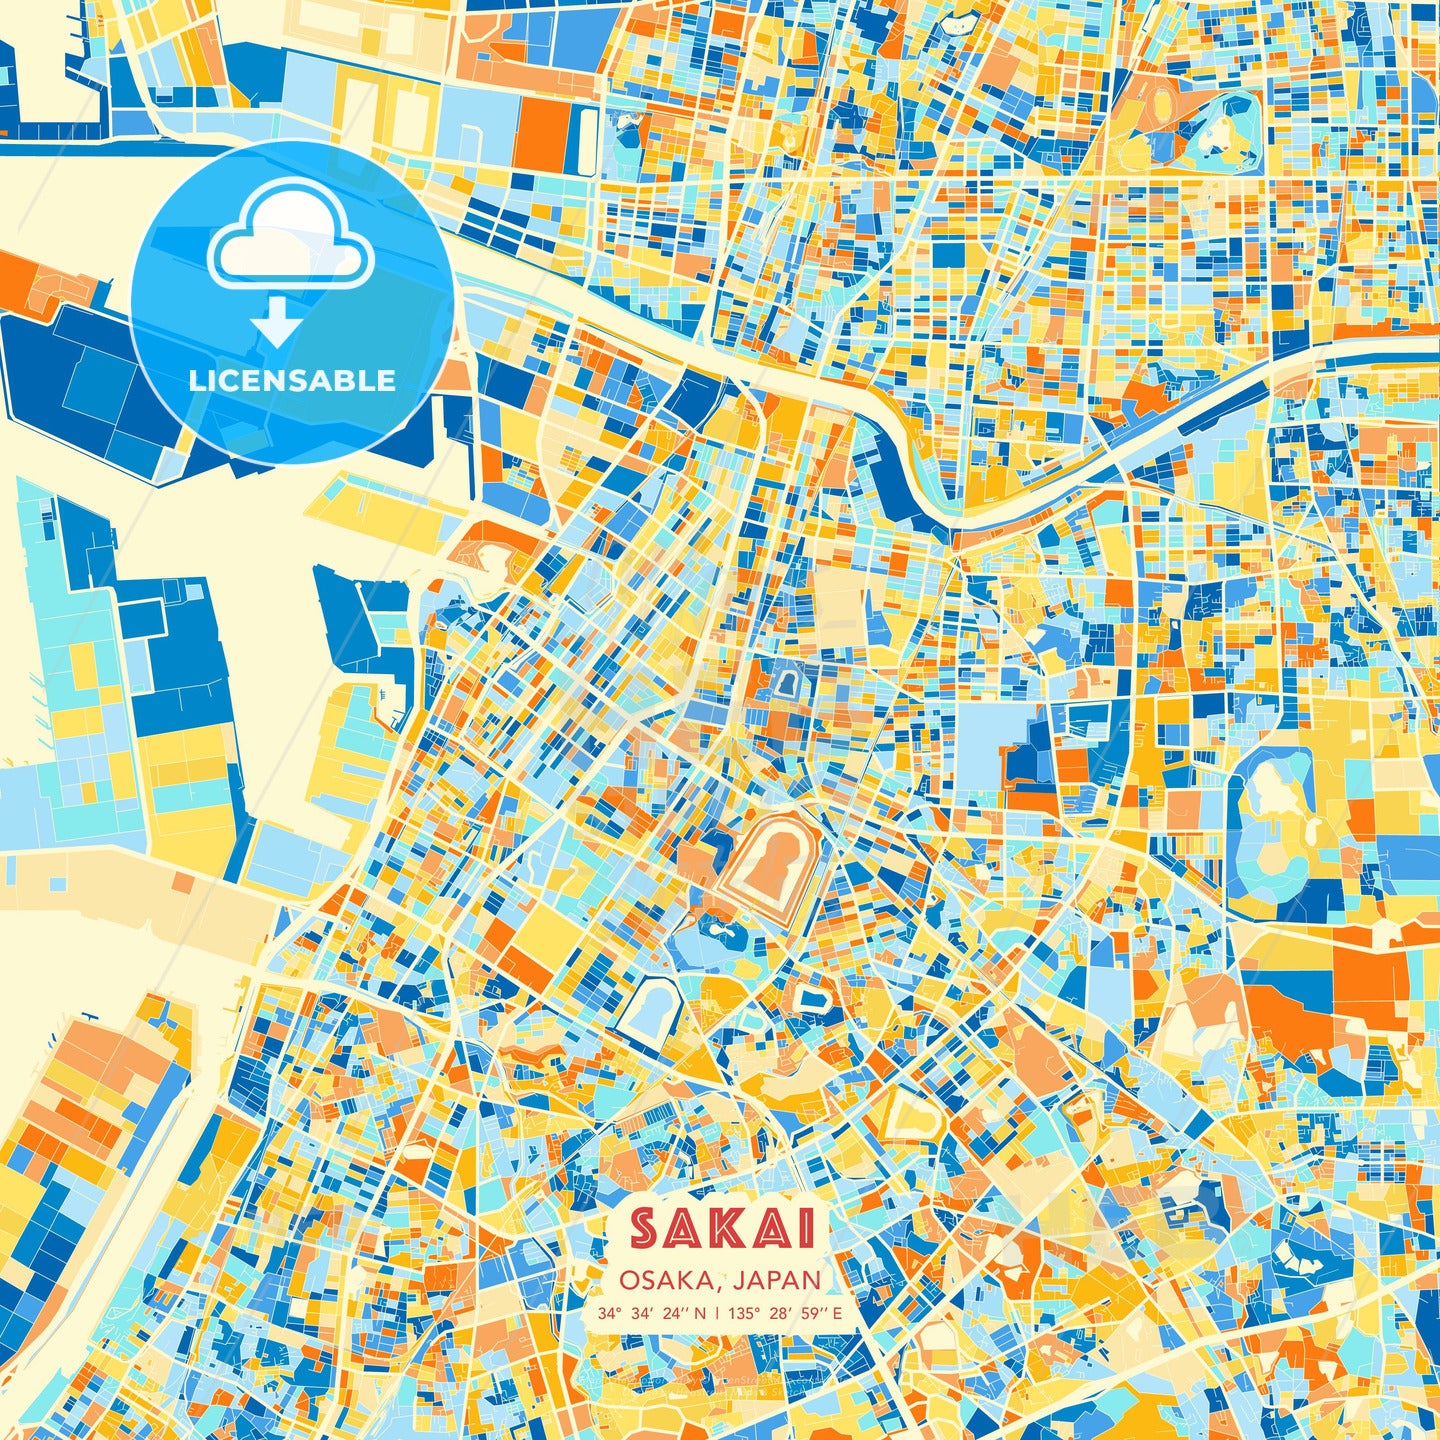 Sakai, Osaka, Japan, map - HEBSTREITS Sketches